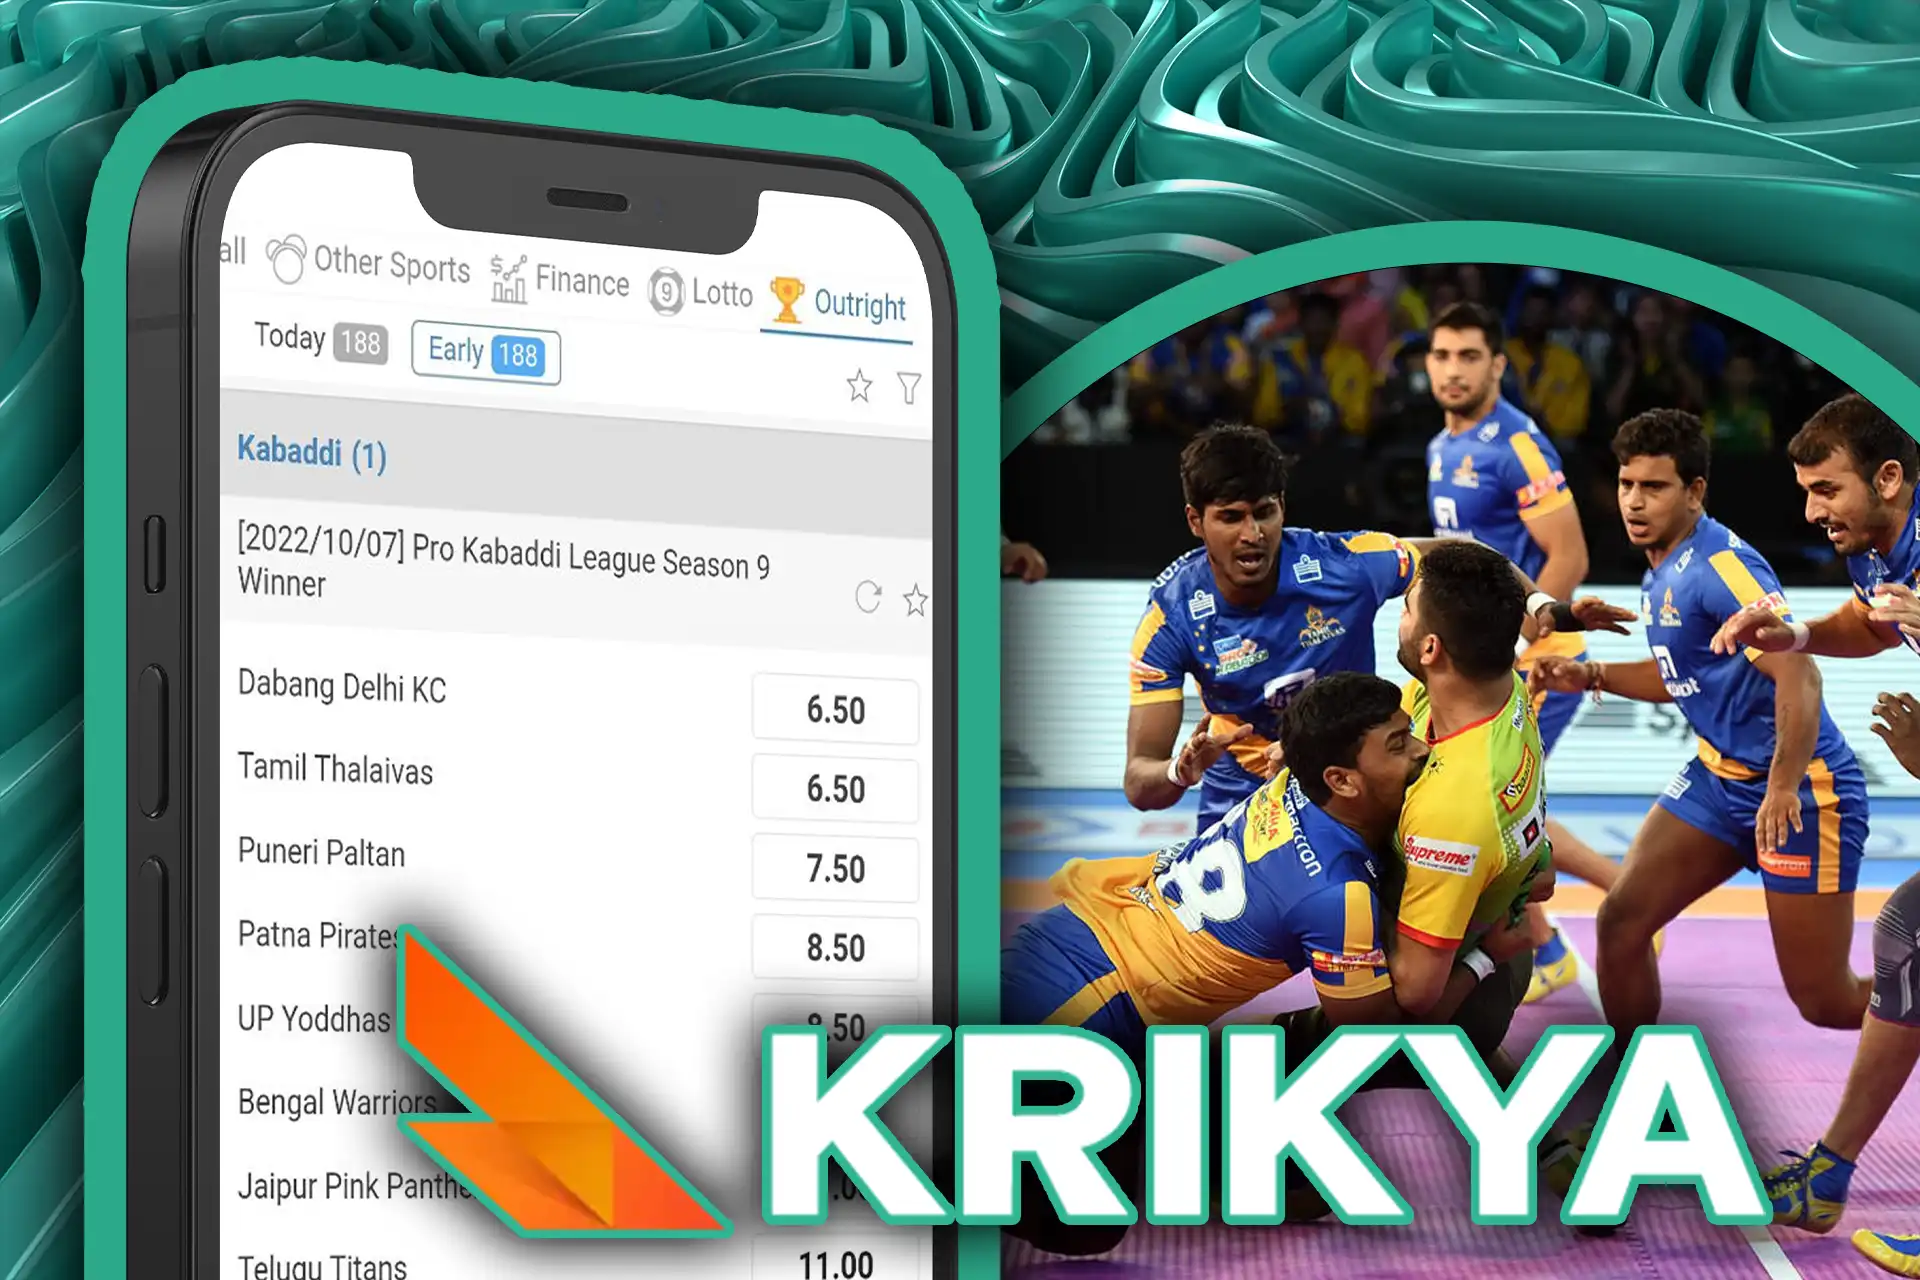 You can also bet on kabaddi via the Krikya app.